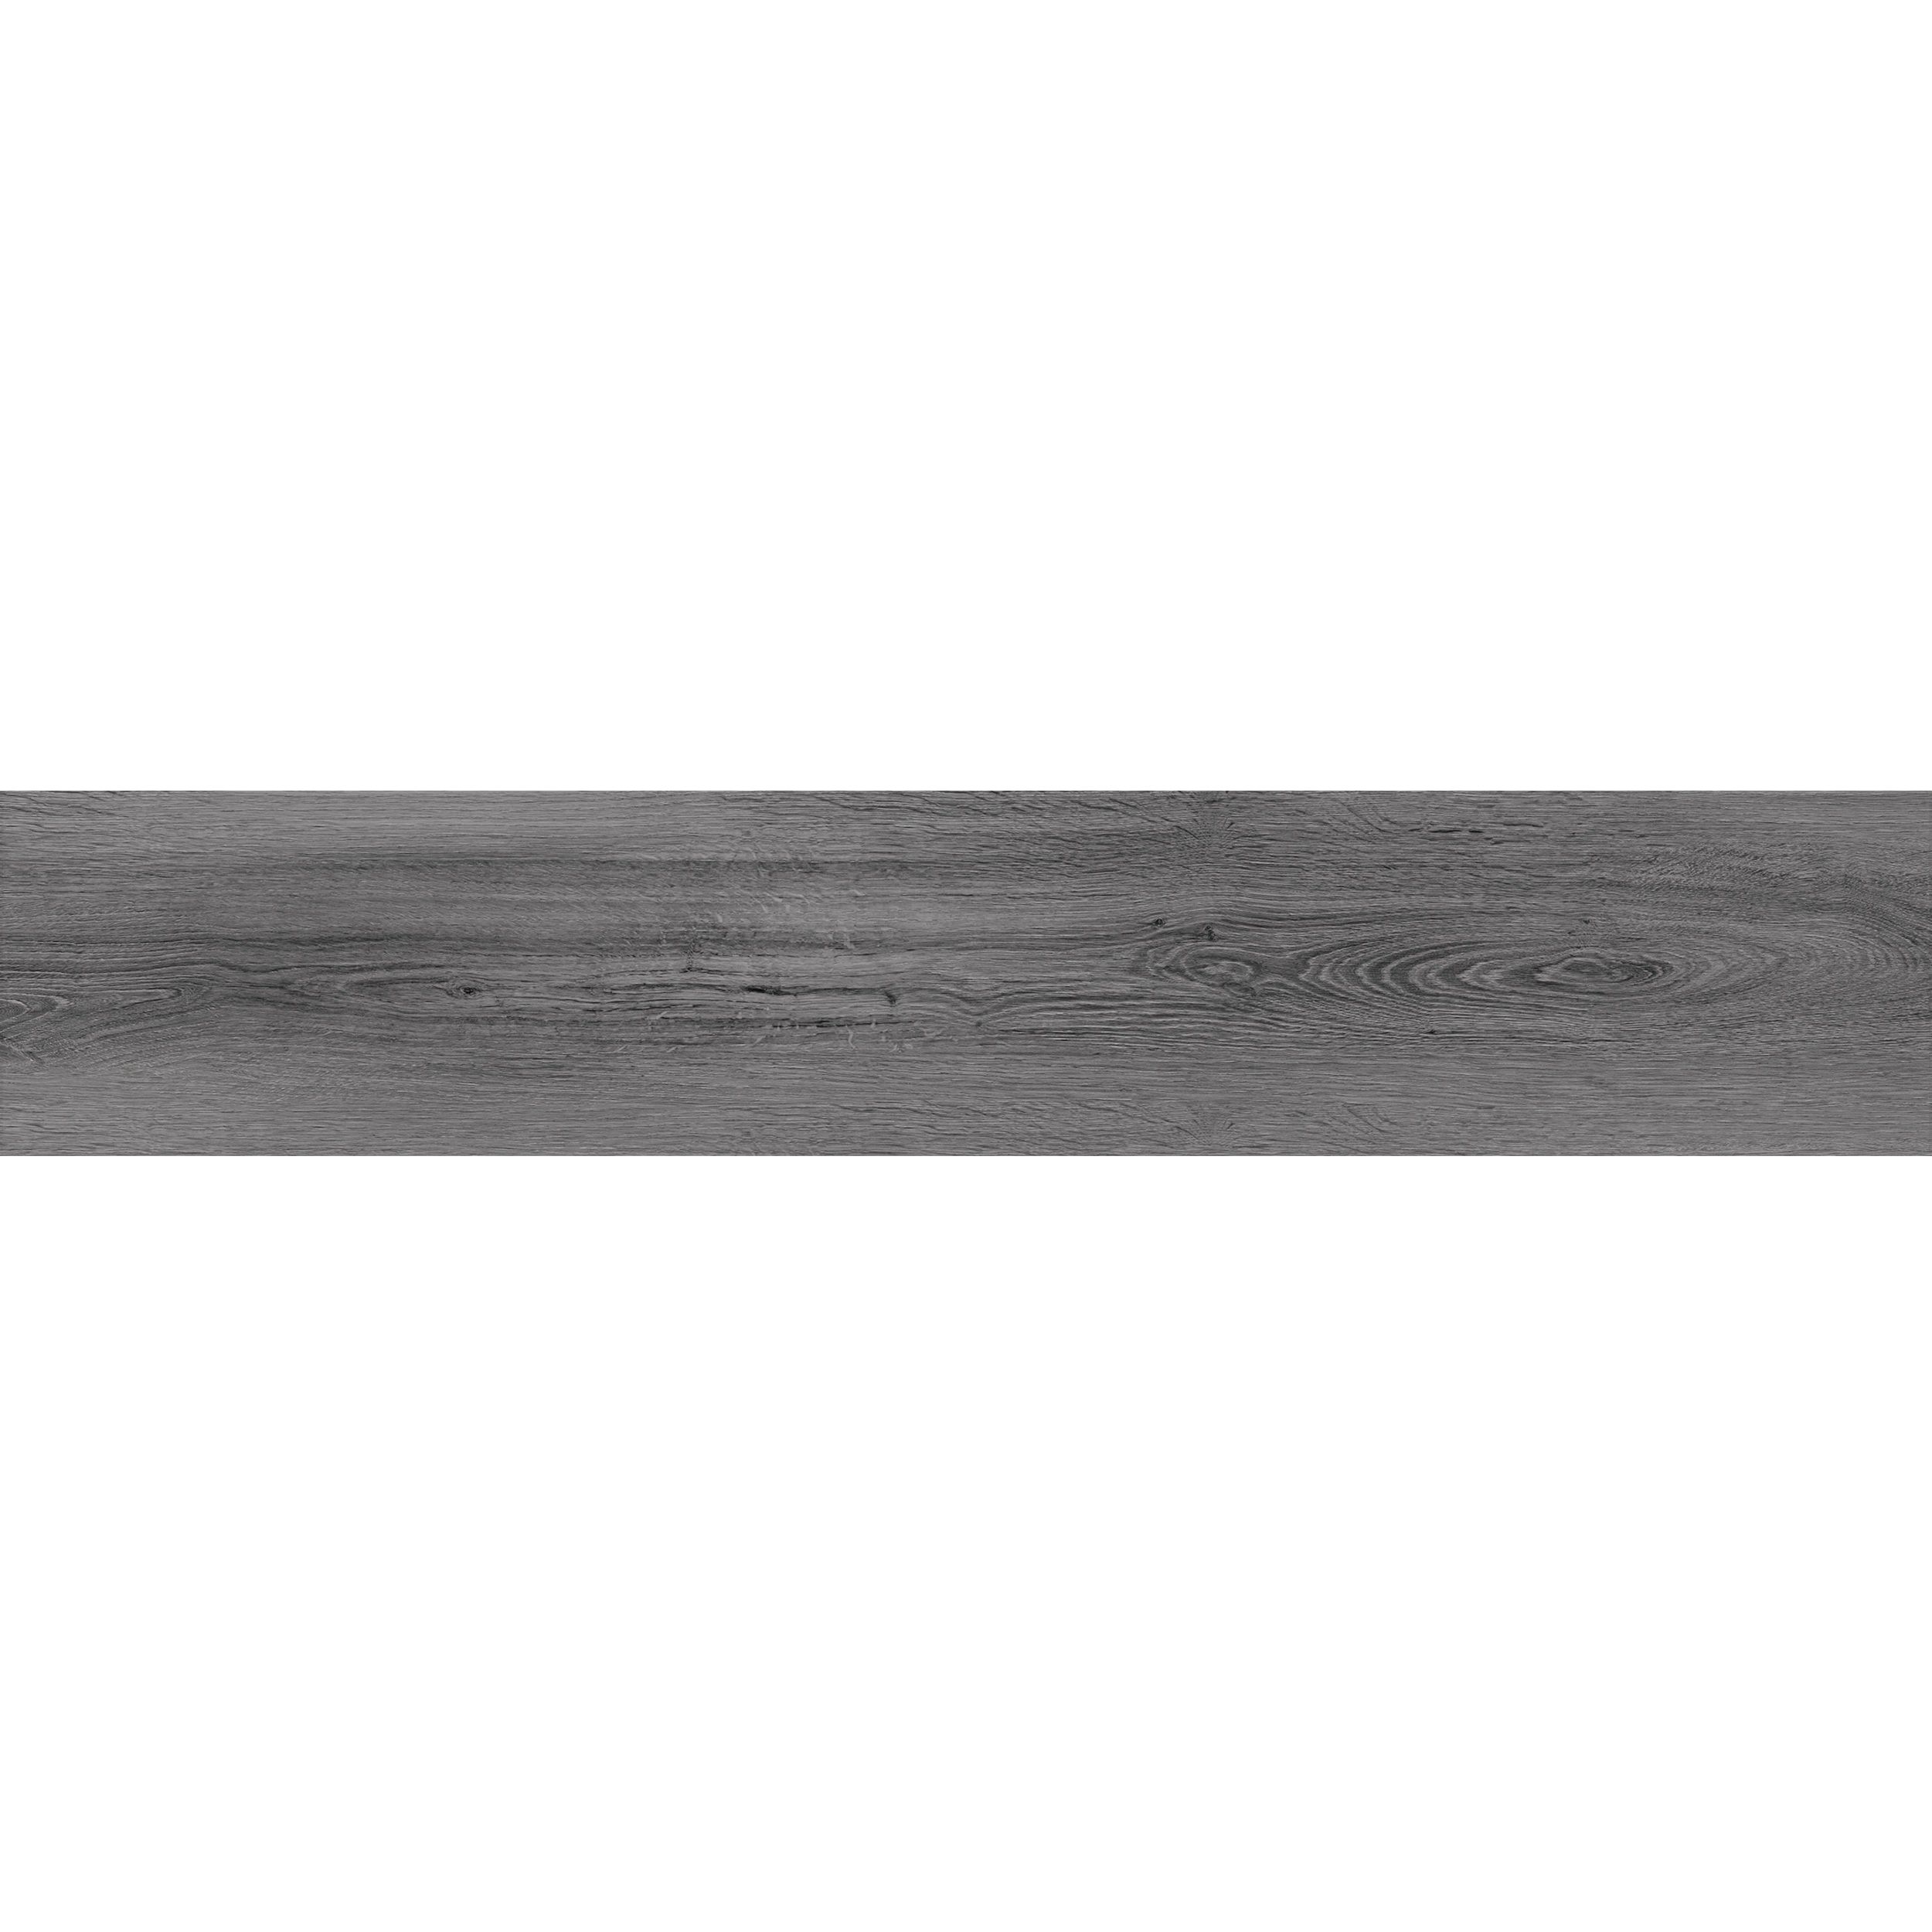 Gospel Dark Grey Wood effect Planks Sample of 1